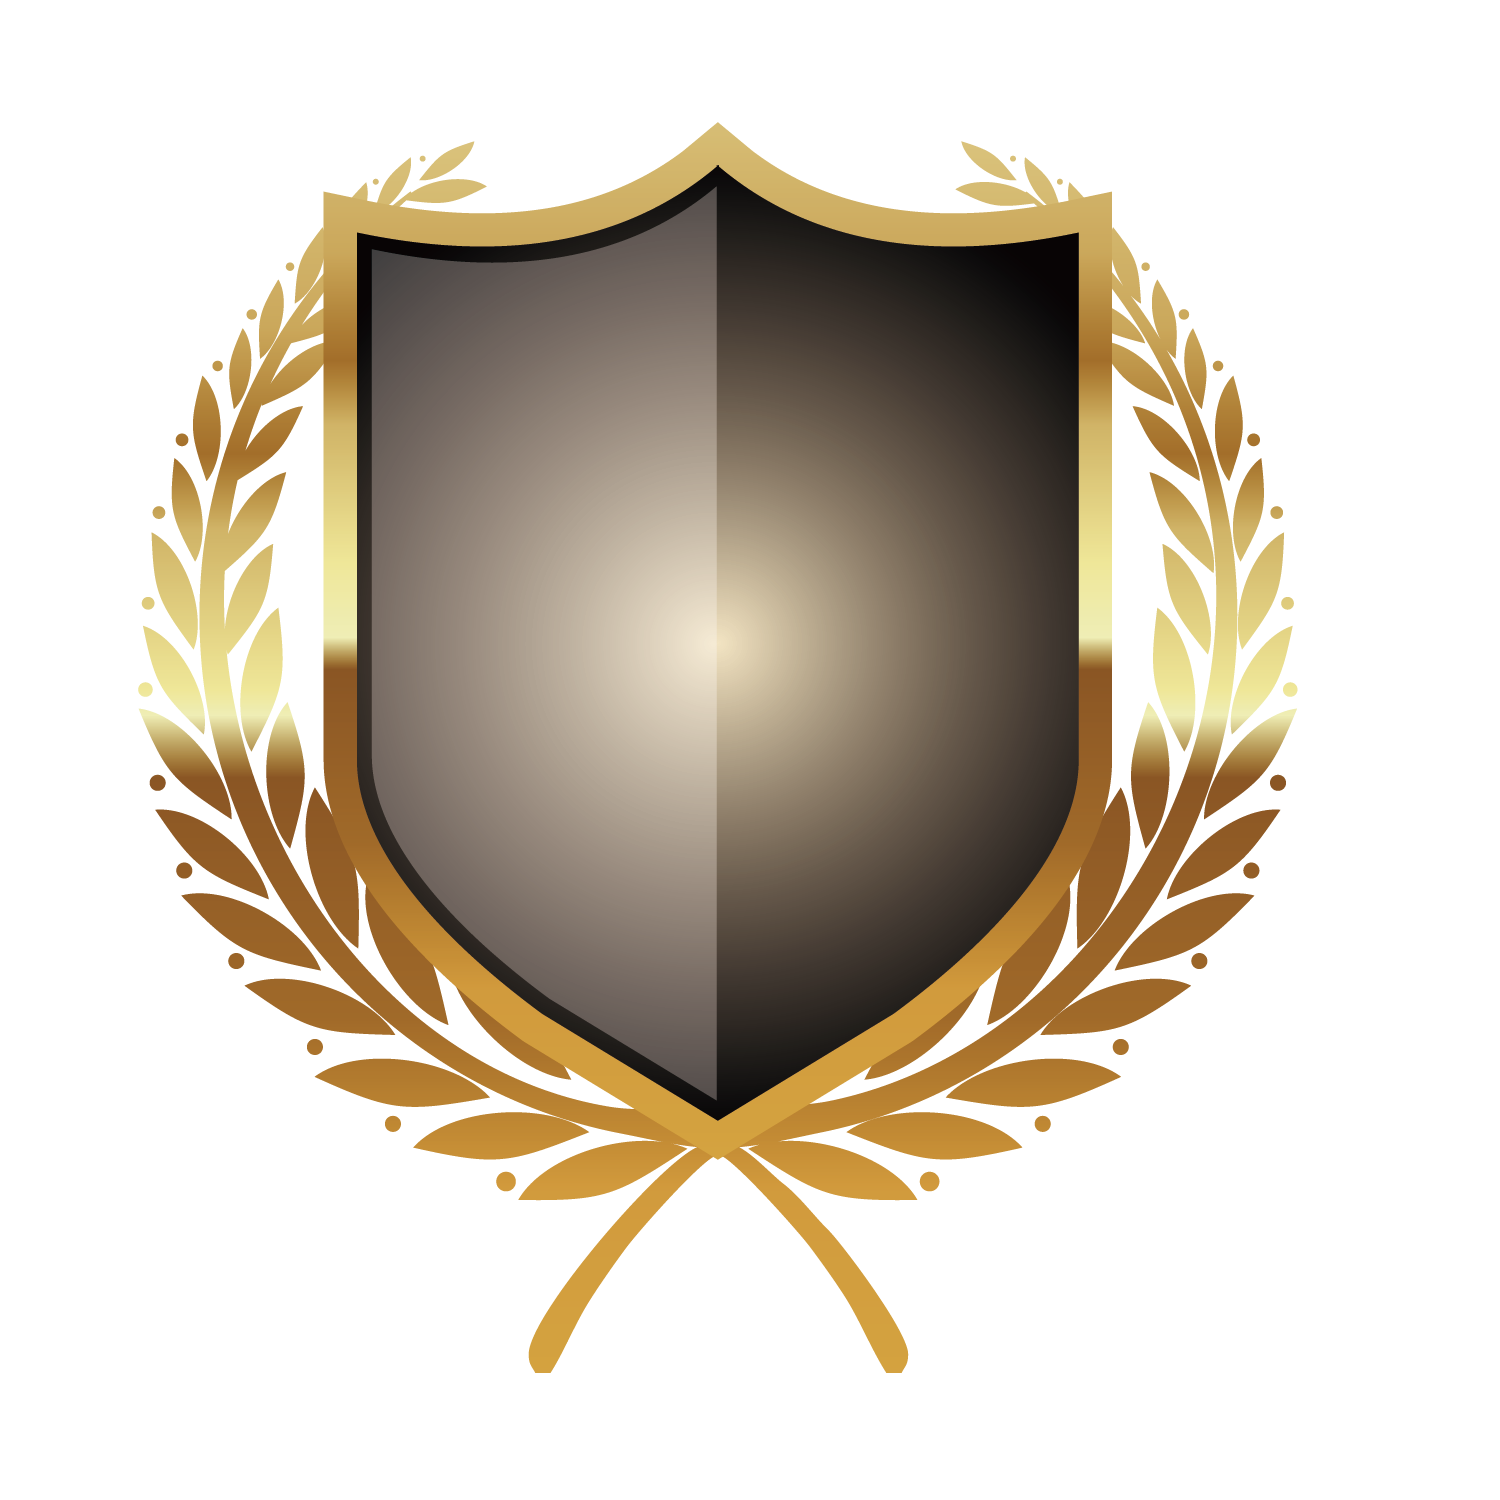 Clipart shield metallic. Badge icon metal transprent